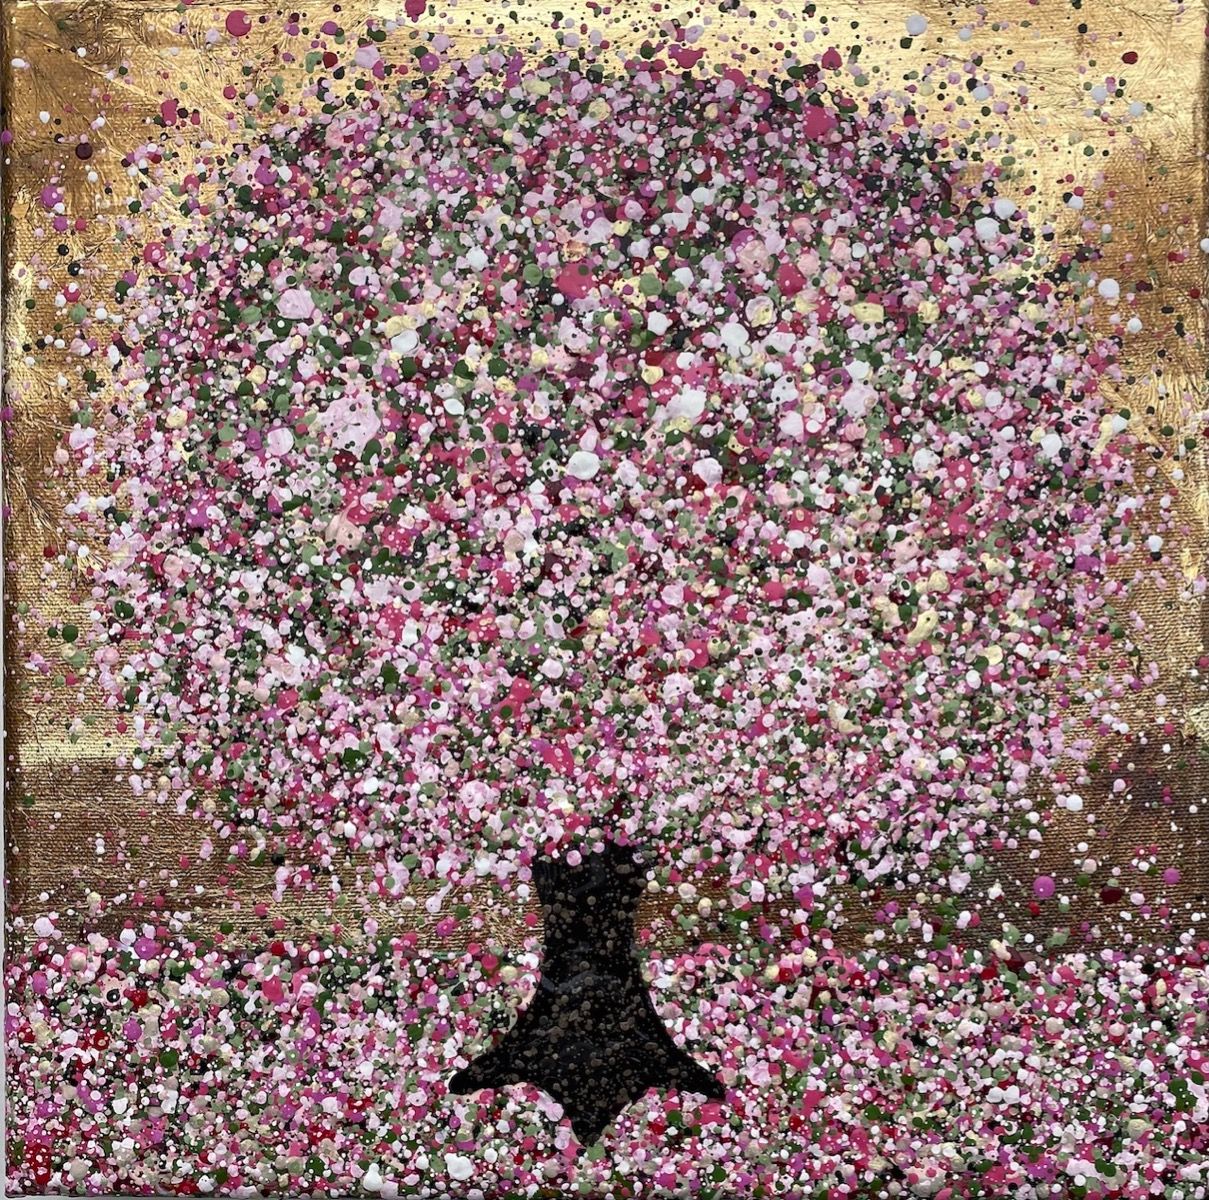 Everlasting Cherry Blossom II by Nicky Chubb